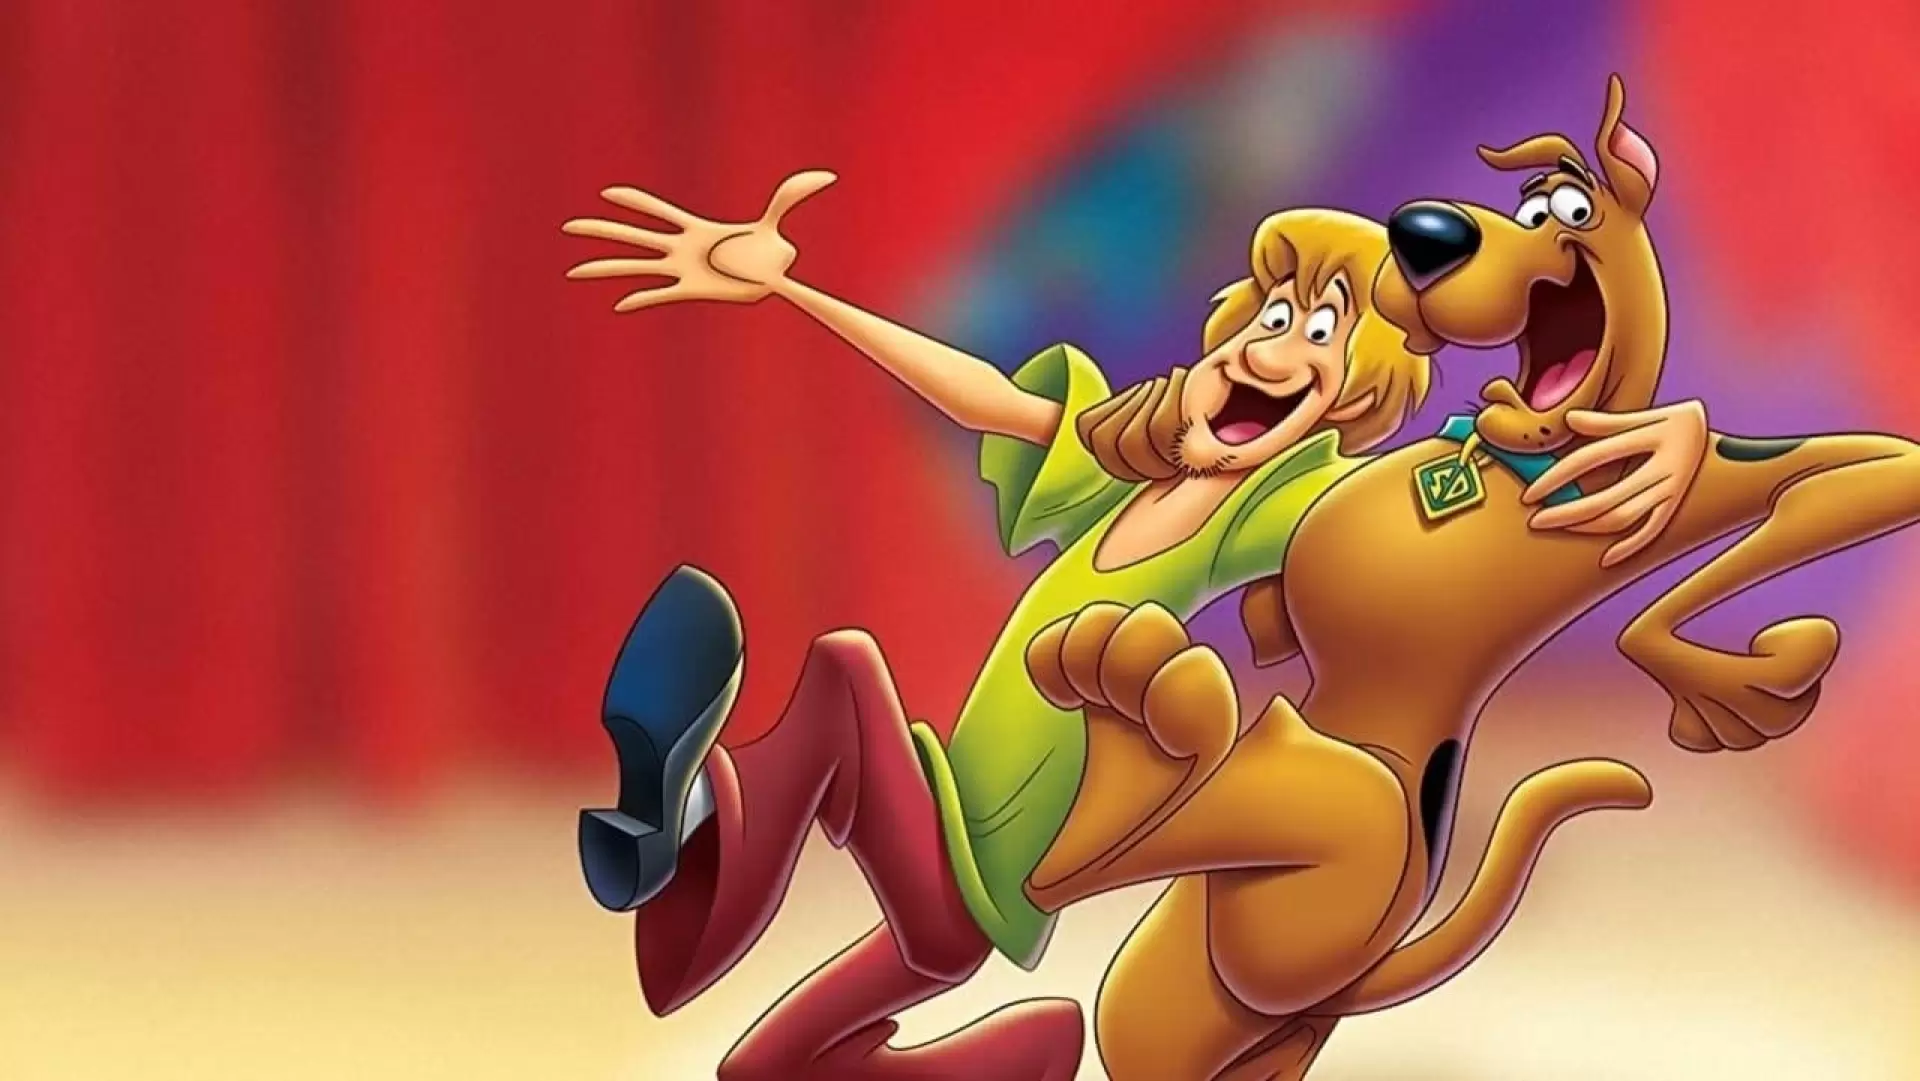 دانلود انیمیشن Scooby-Doo! Music of the Vampire 2012 (اسکوبی دو موسیقی خون آشام) با زیرنویس فارسی